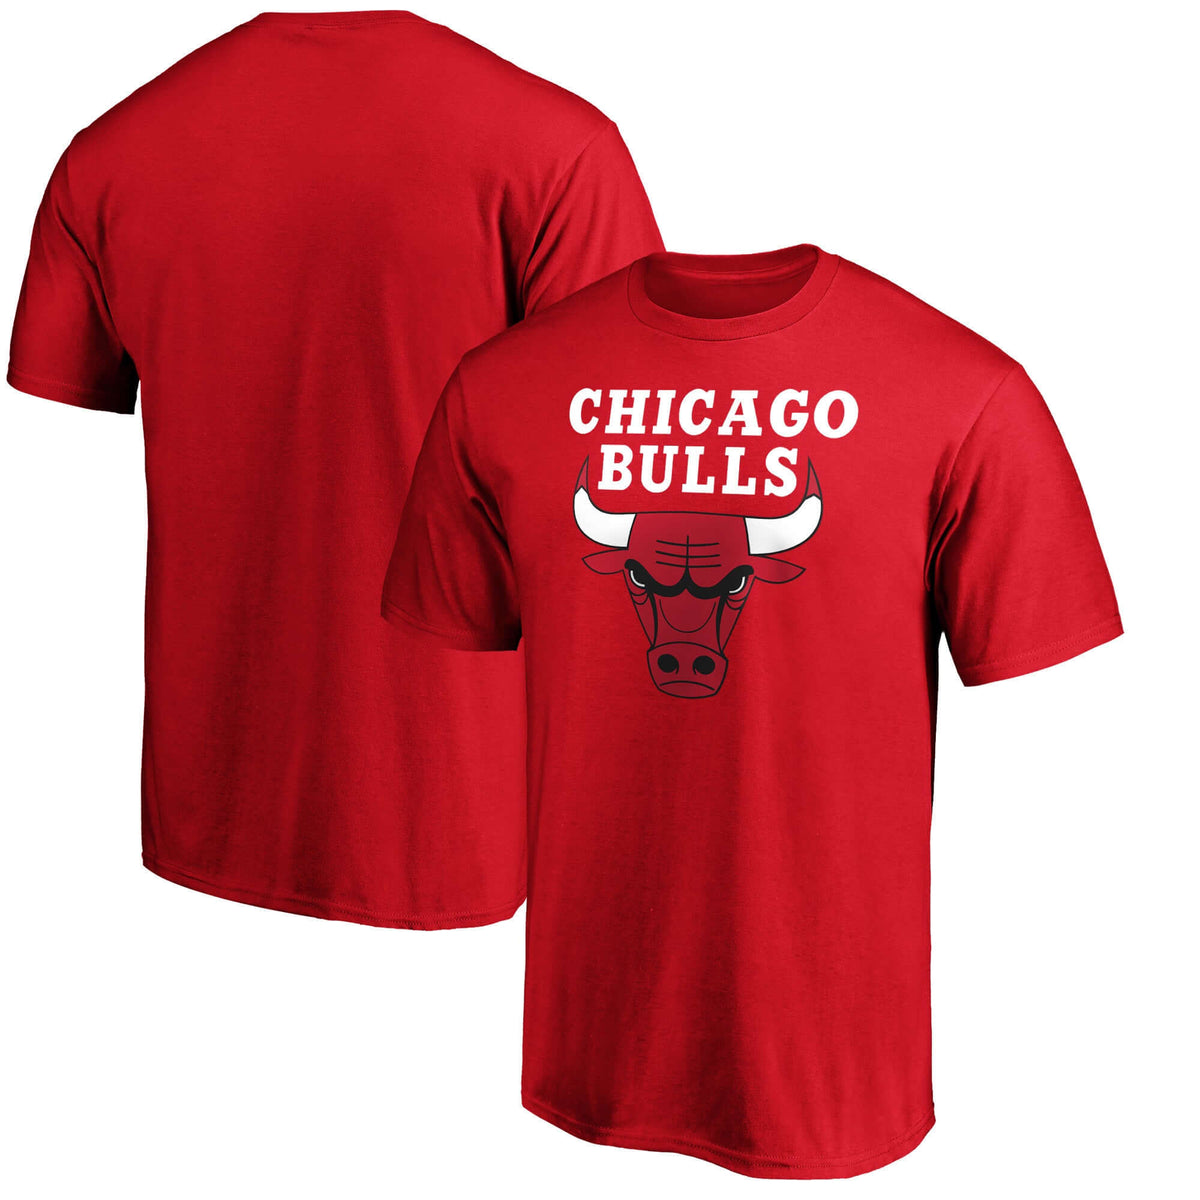 Chicago Bulls Mens in Chicago Bulls Team Shop 